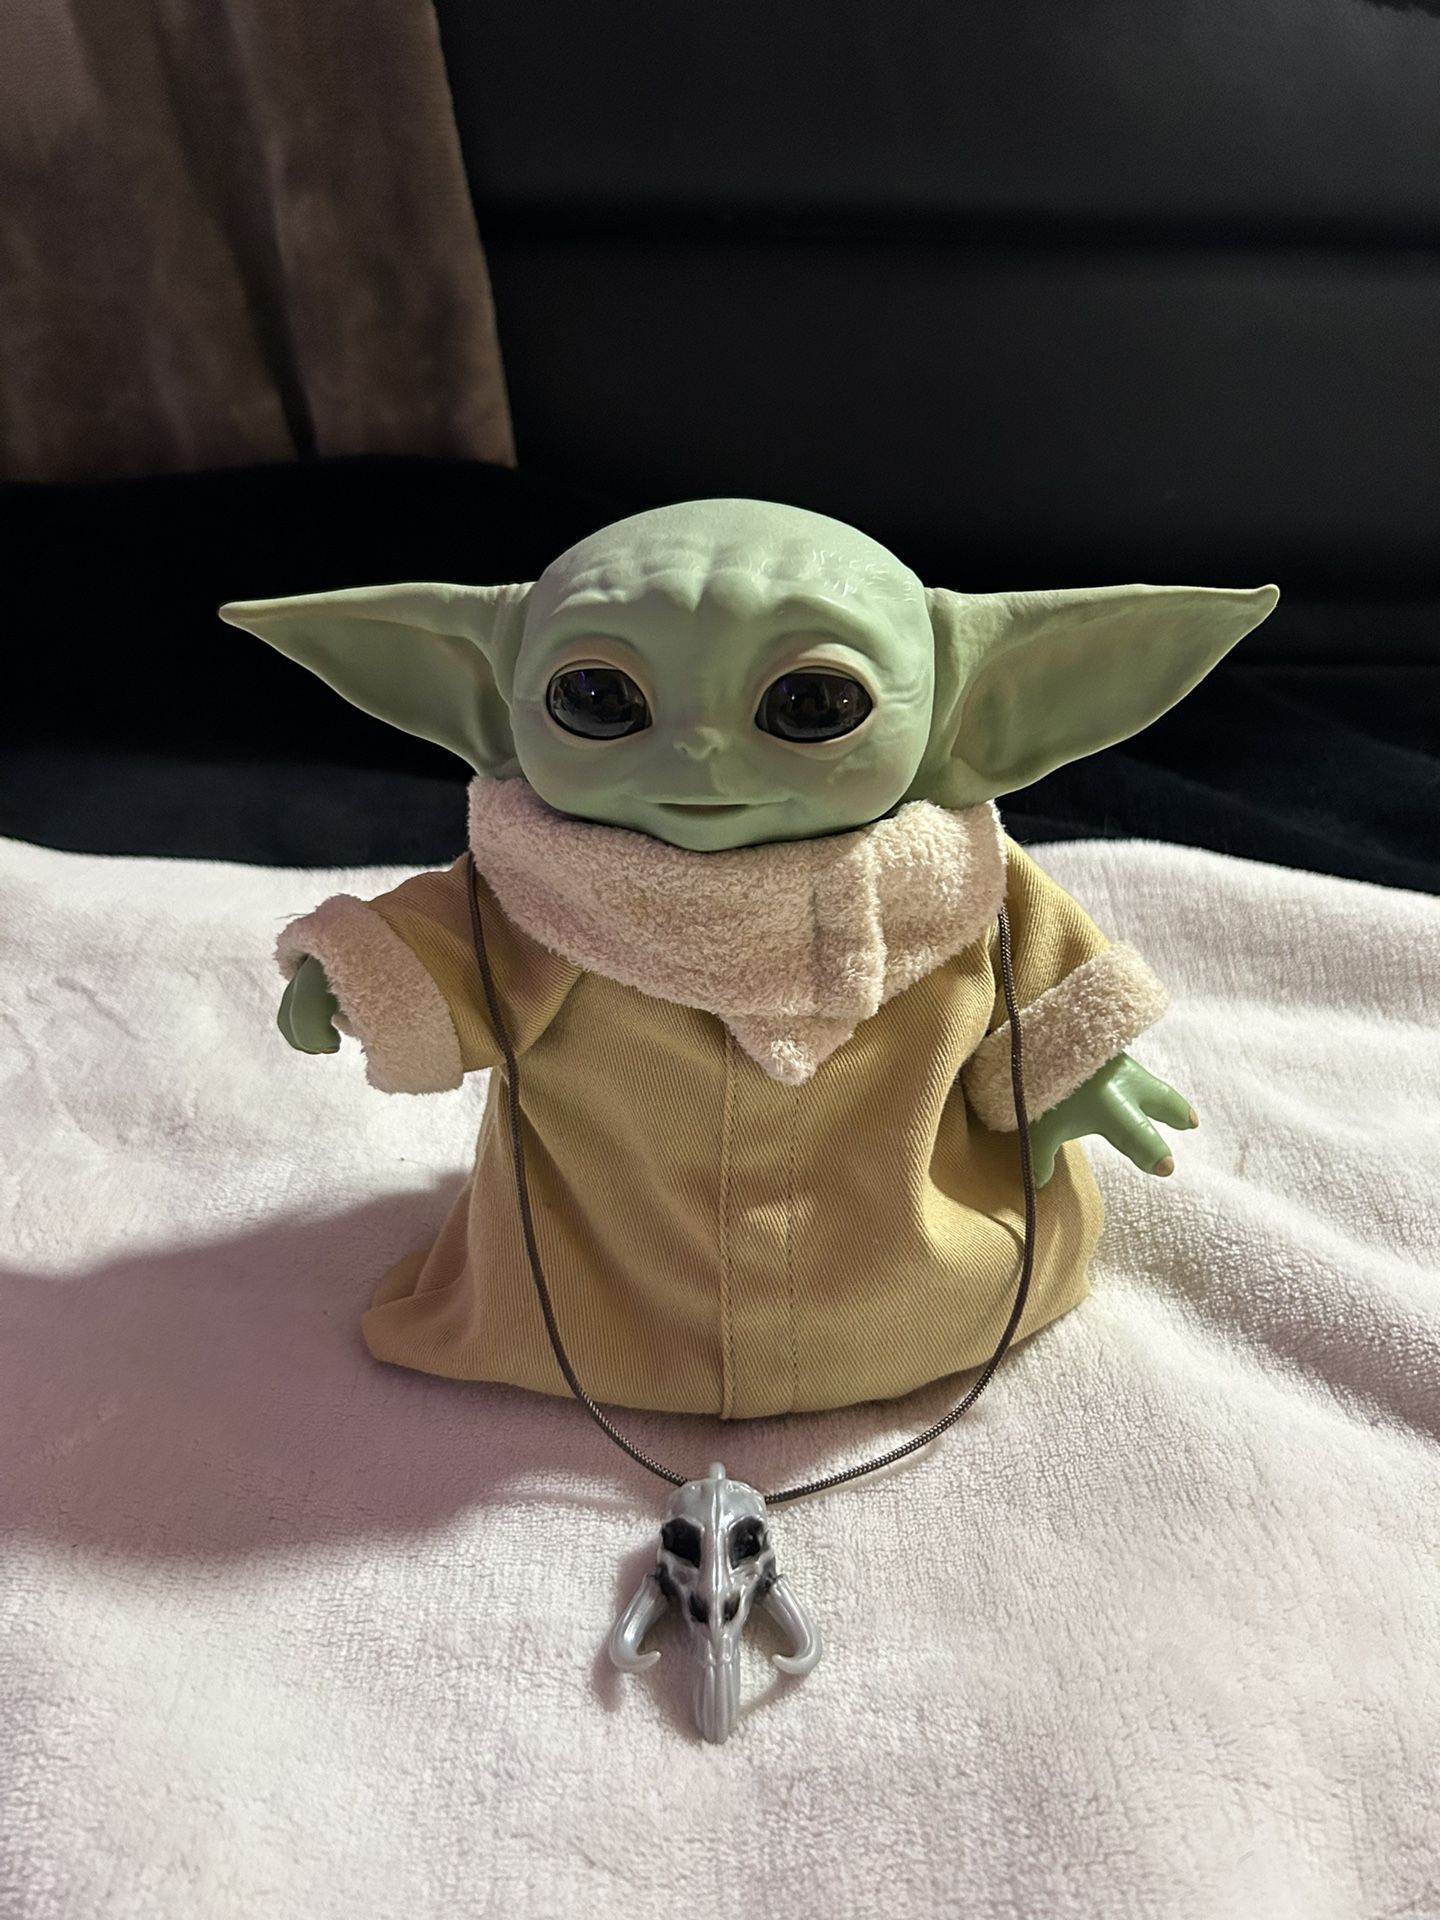 Disney Baby Yoda - Star Wars The Mandalorian The Child Animatronic